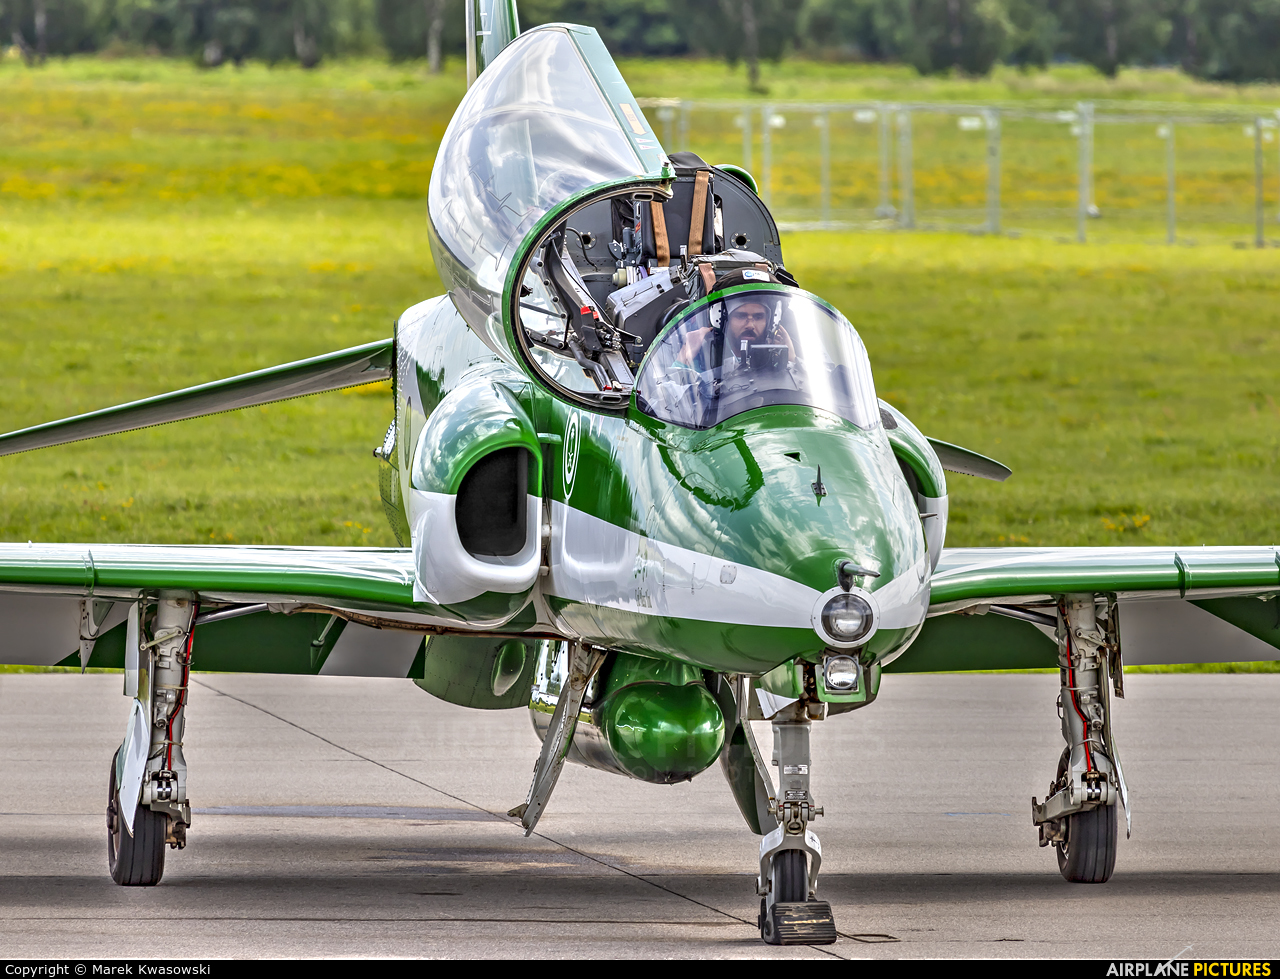 Saudi Arabia - Air Force: Saudi Hawks 8817 aircraft at Gdynia- Babie Doły (Oksywie)